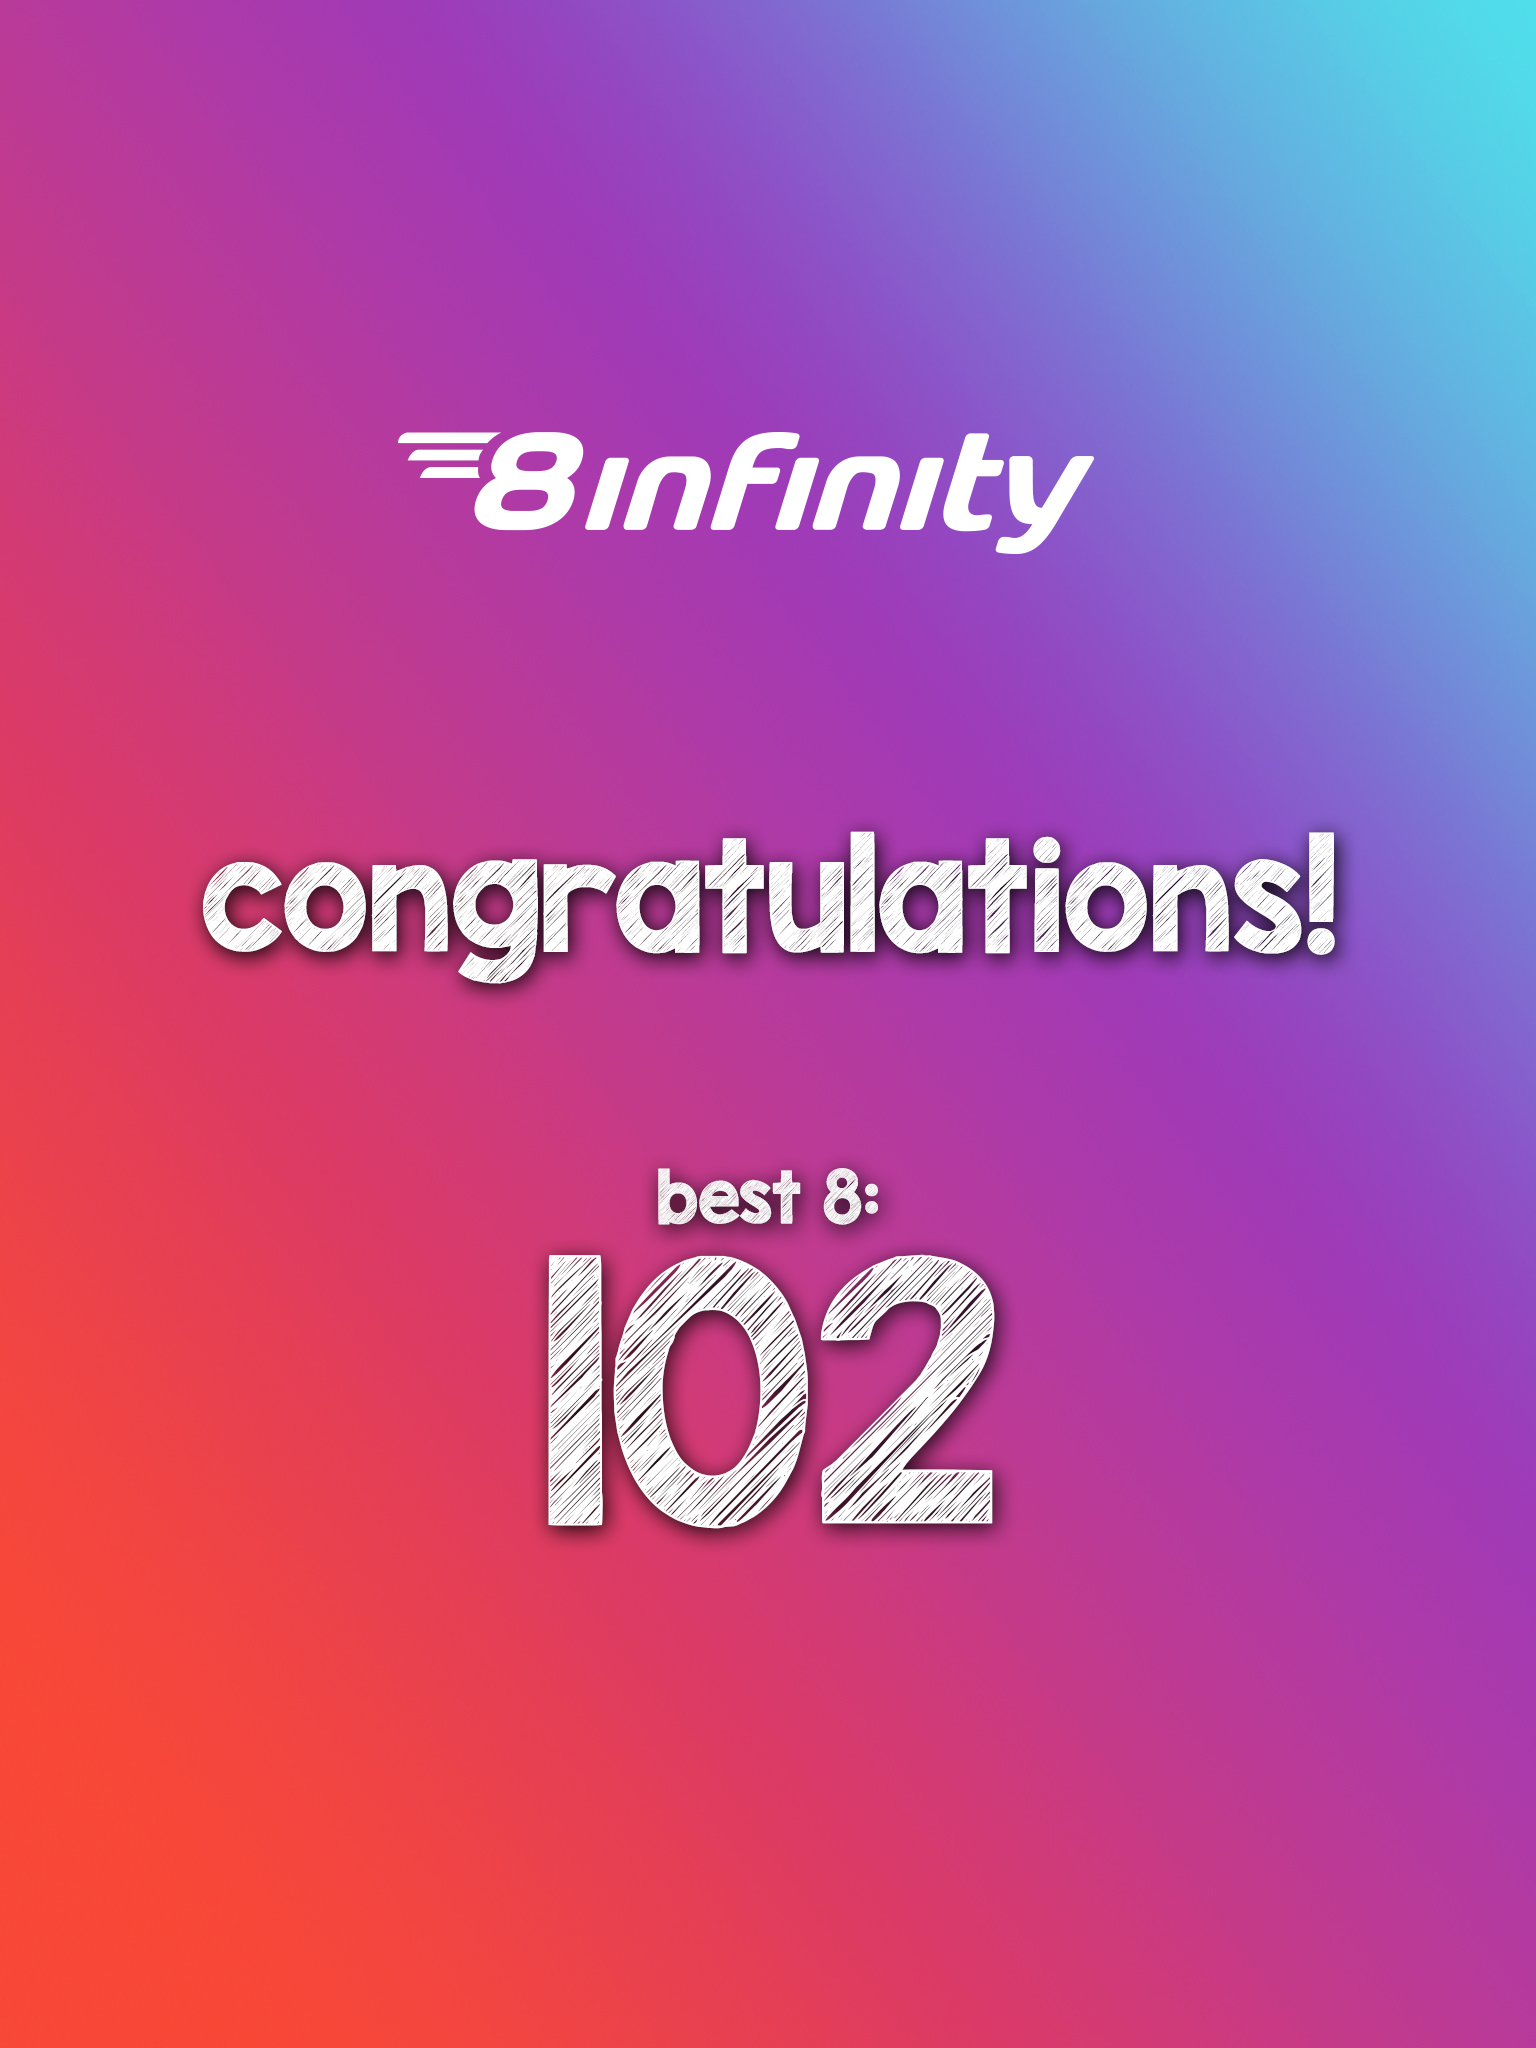 10  8infinity   congratulation